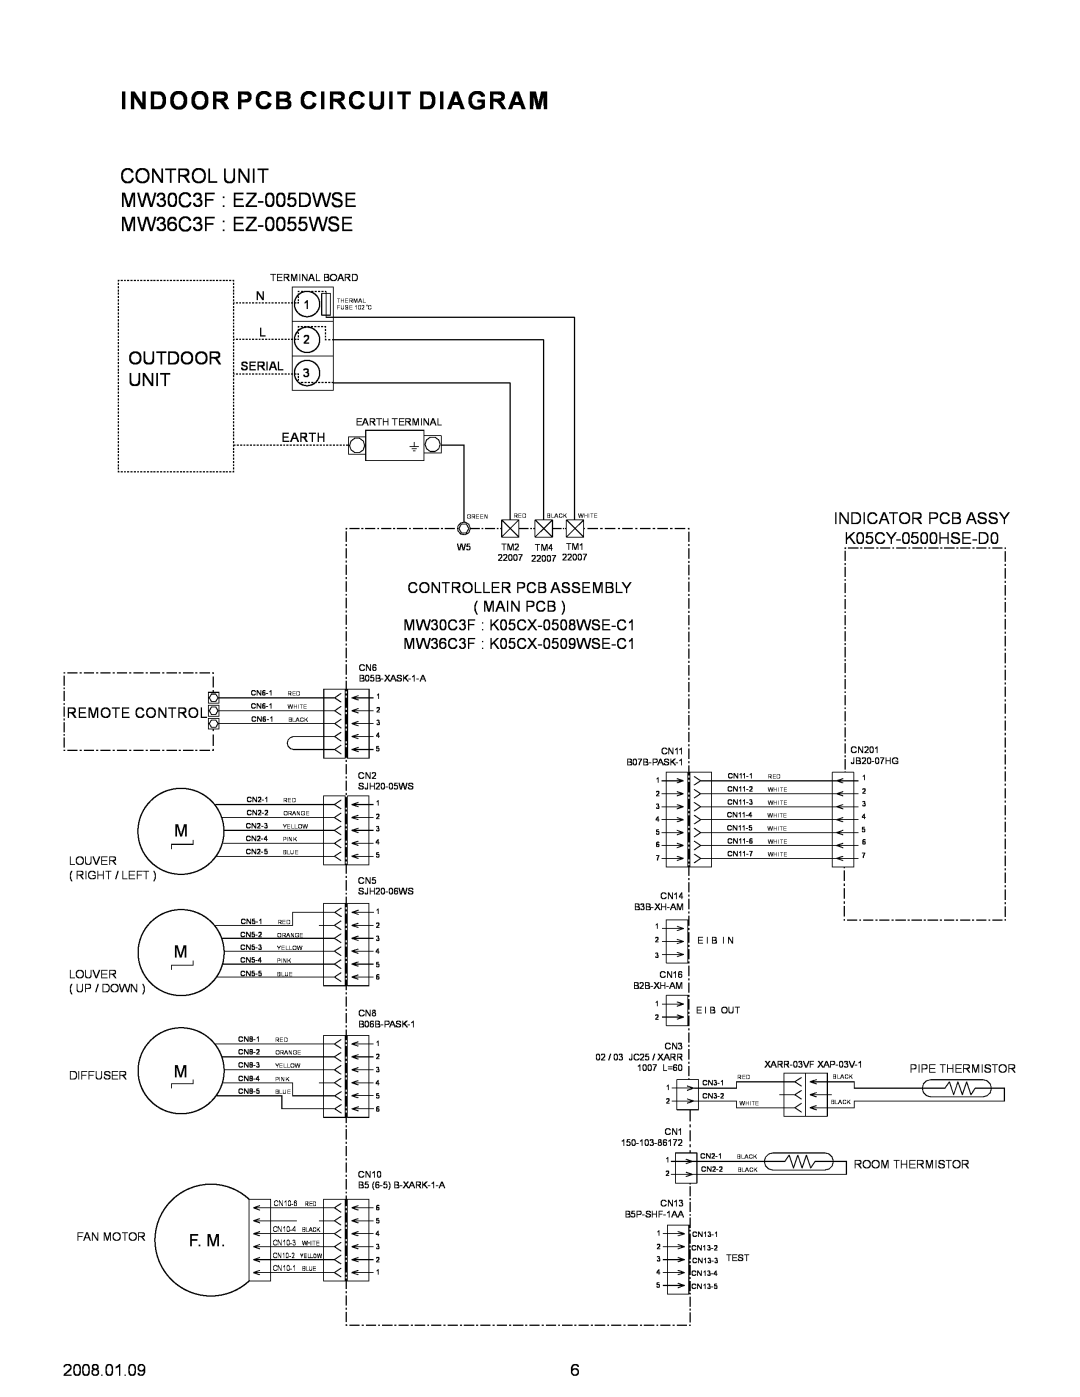 Friedrich MR30C3F Indoor Pcb Circuit Diagram, CONTROL UNIT MW30C3F EZ-005DWSE, MW36C3F EZ-0055WSE, Outdoor, Unit, F. M 